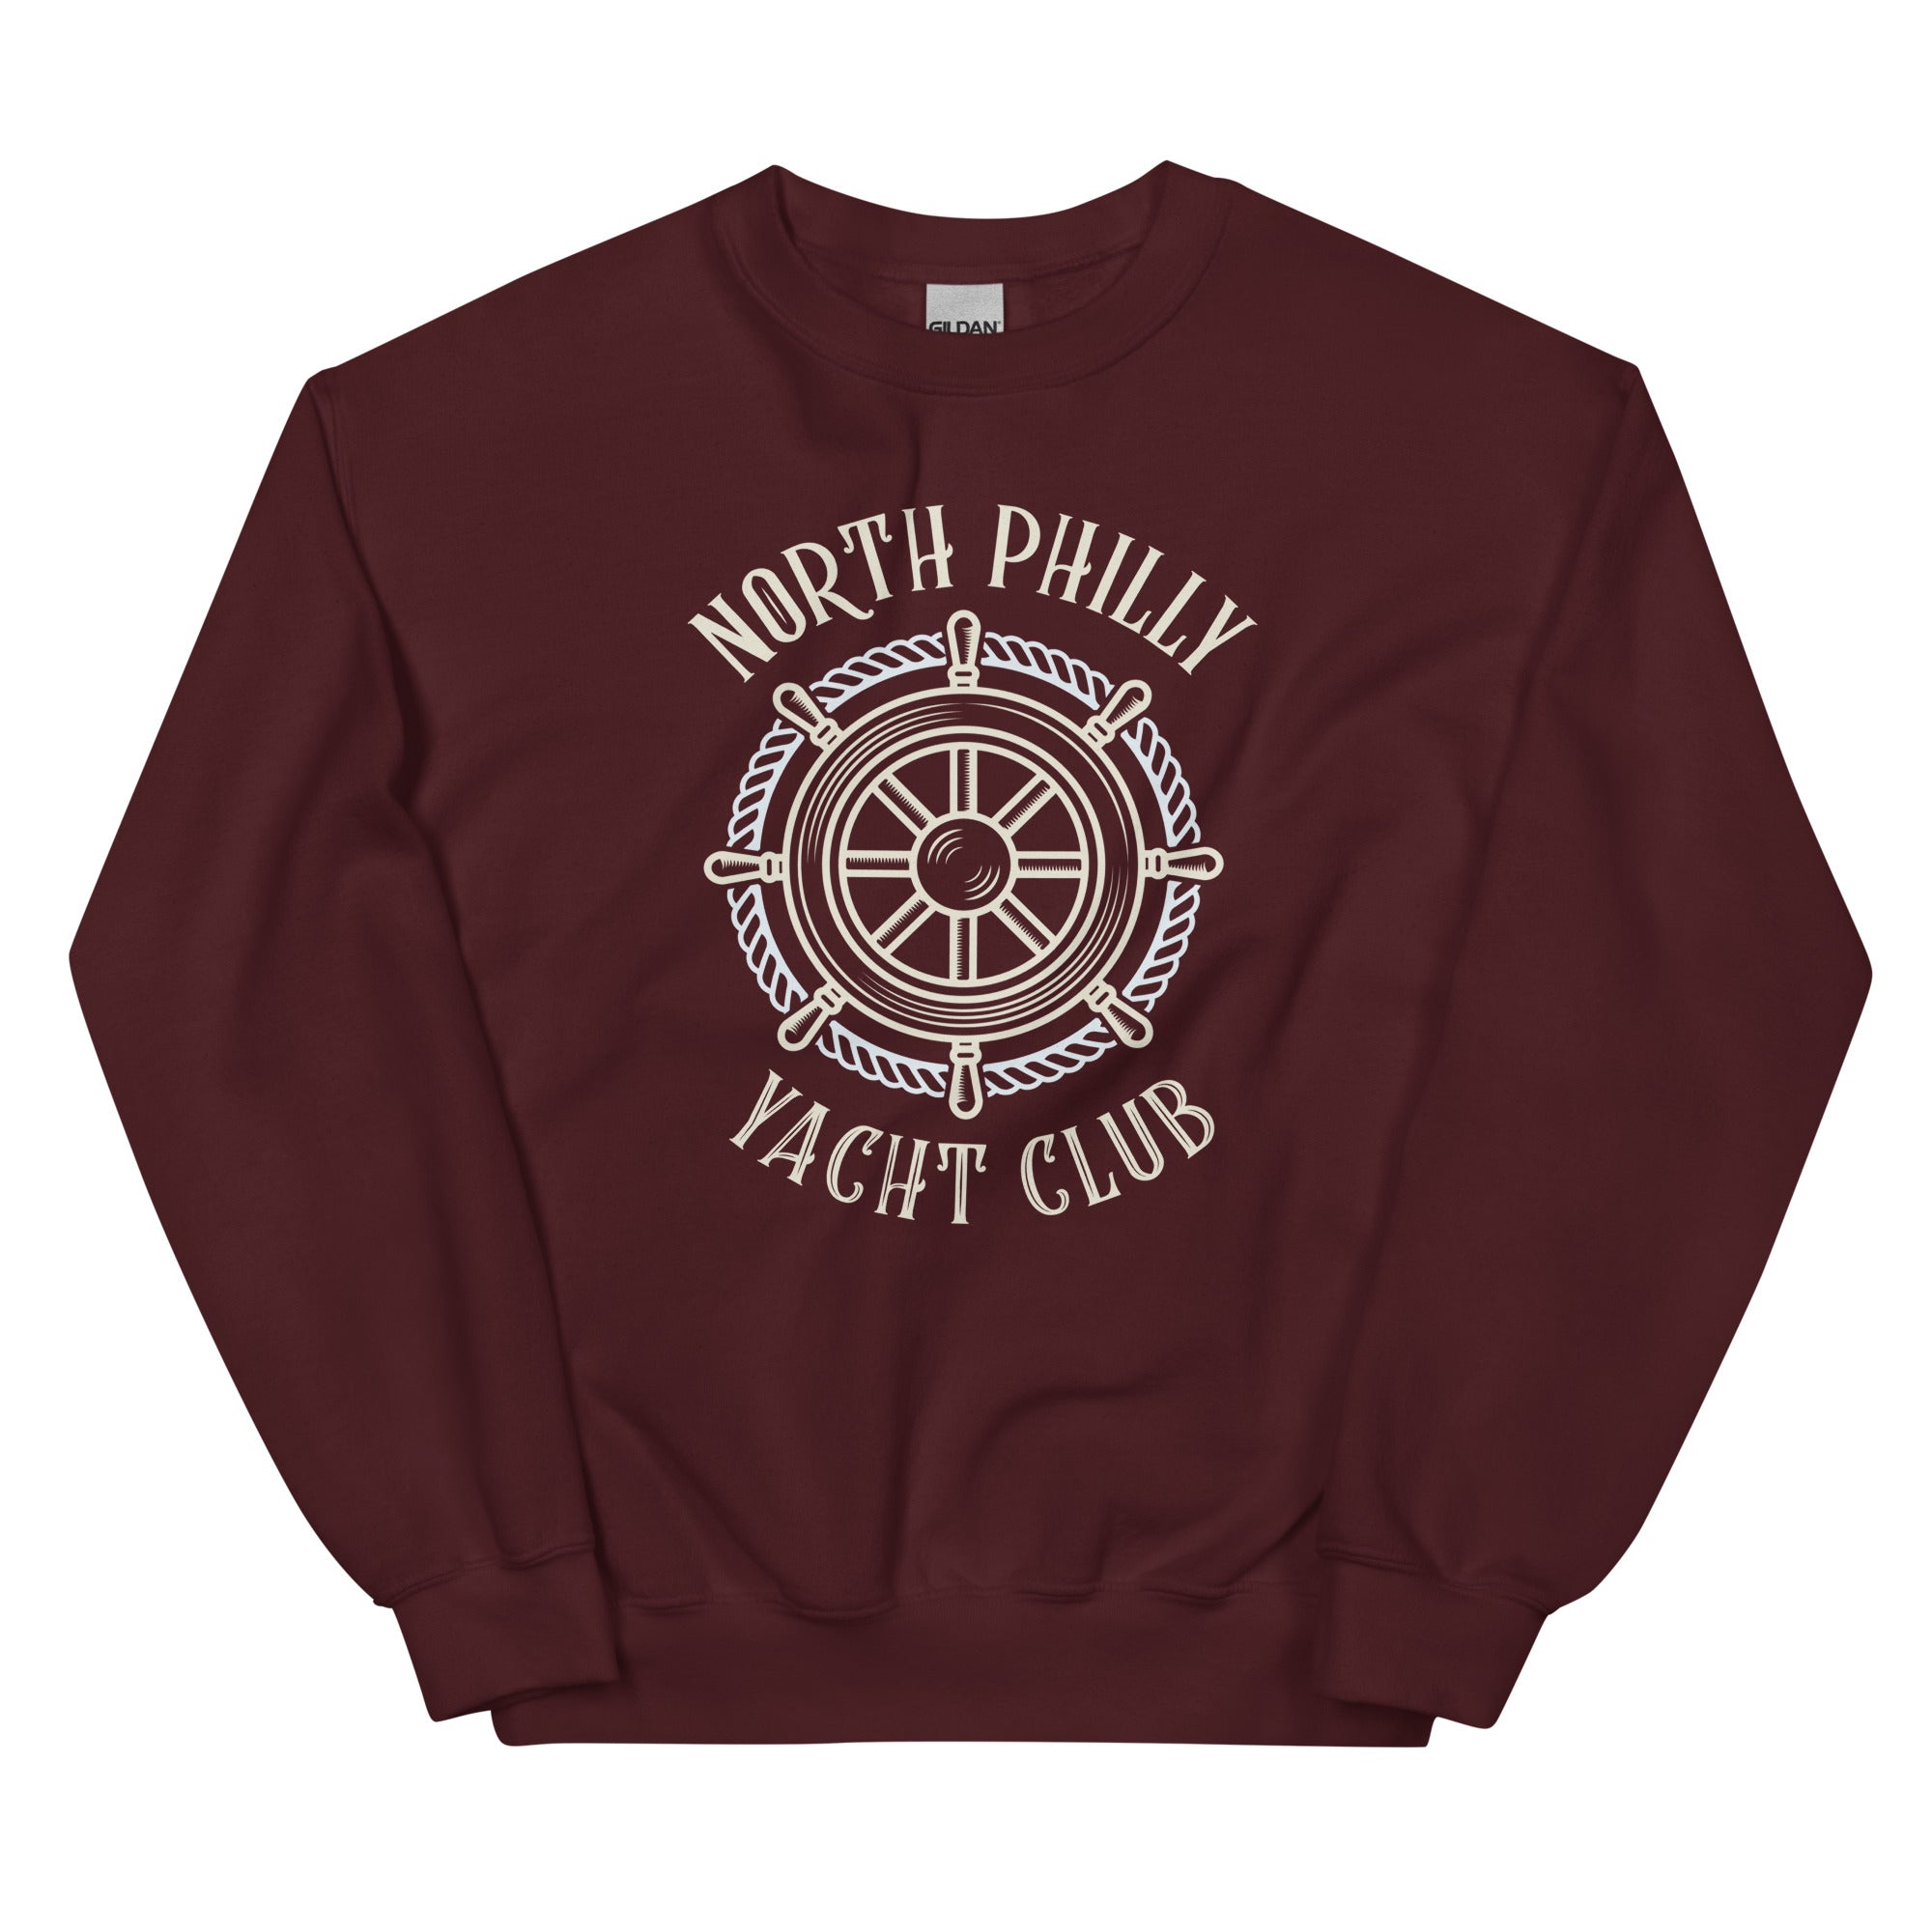 North Philly Philadelphia yacht club maroon sweatshirt Phillygoat